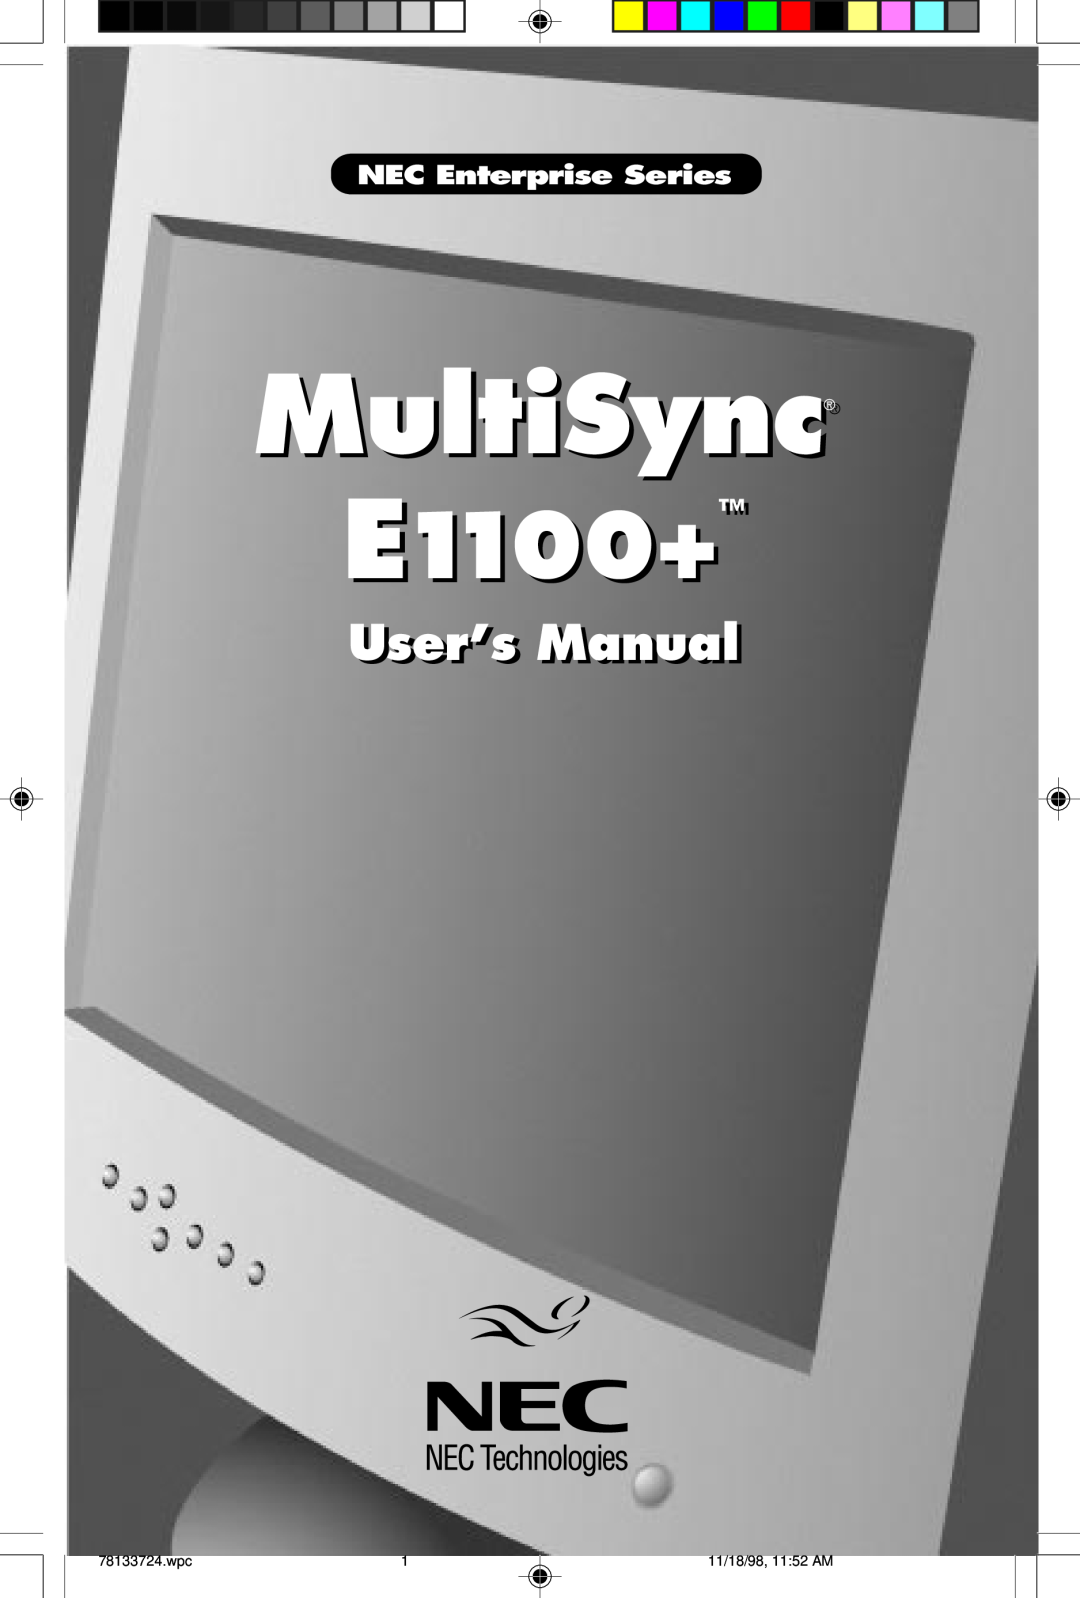 NEC E1100+ user manual User’s Manuall, MultiSync, NEC Enterprise Series, 78133724.wpc, 11/18/98, 1152 AM 